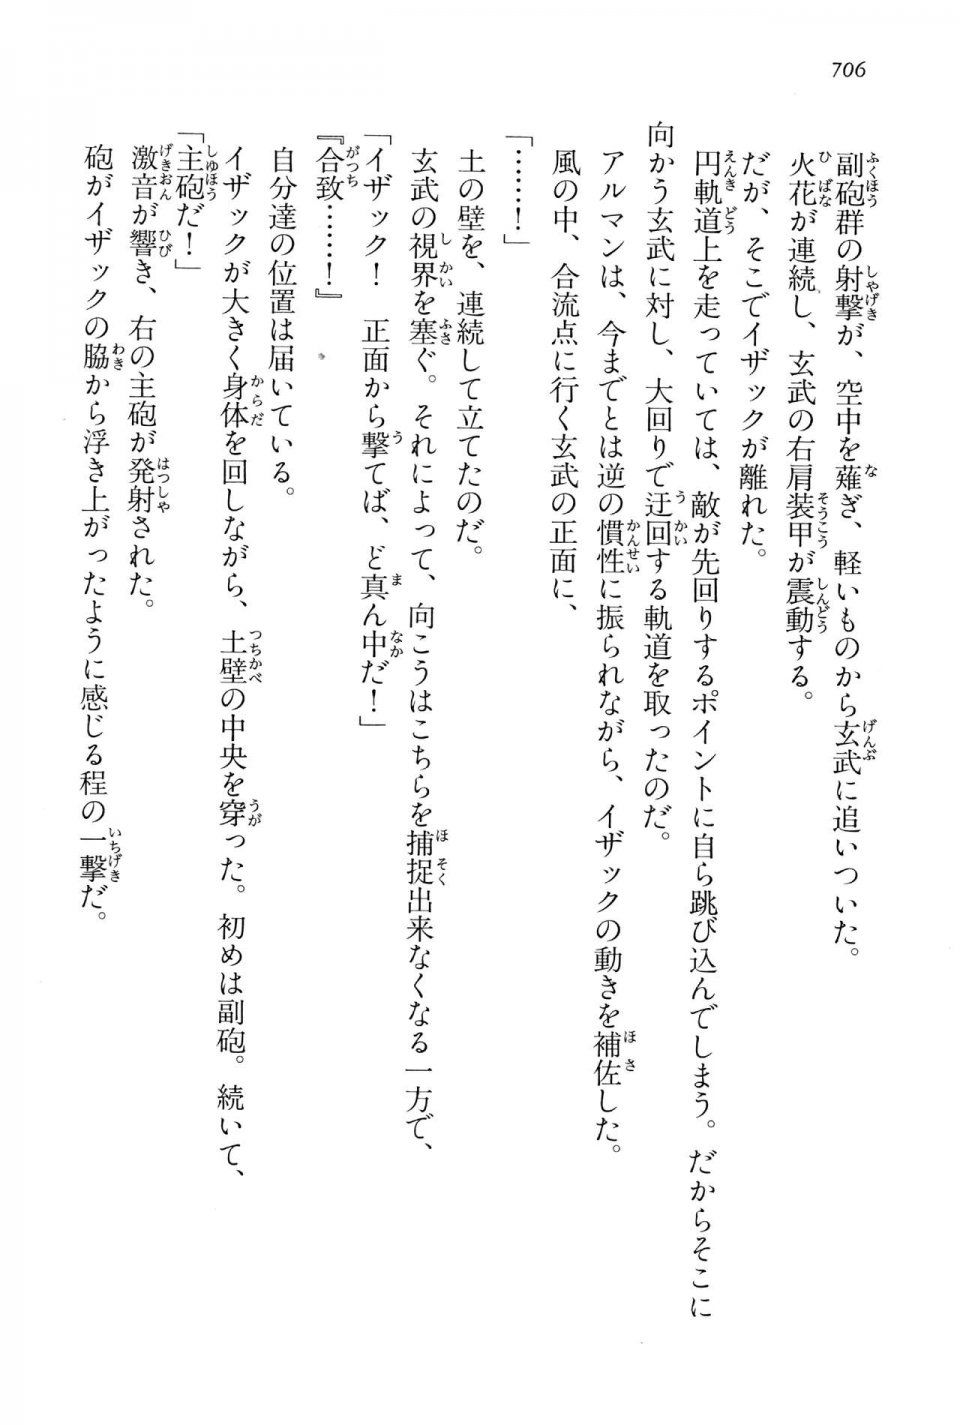 Kyoukai Senjou no Horizon LN Vol 15(6C) Part 2 - Photo #176